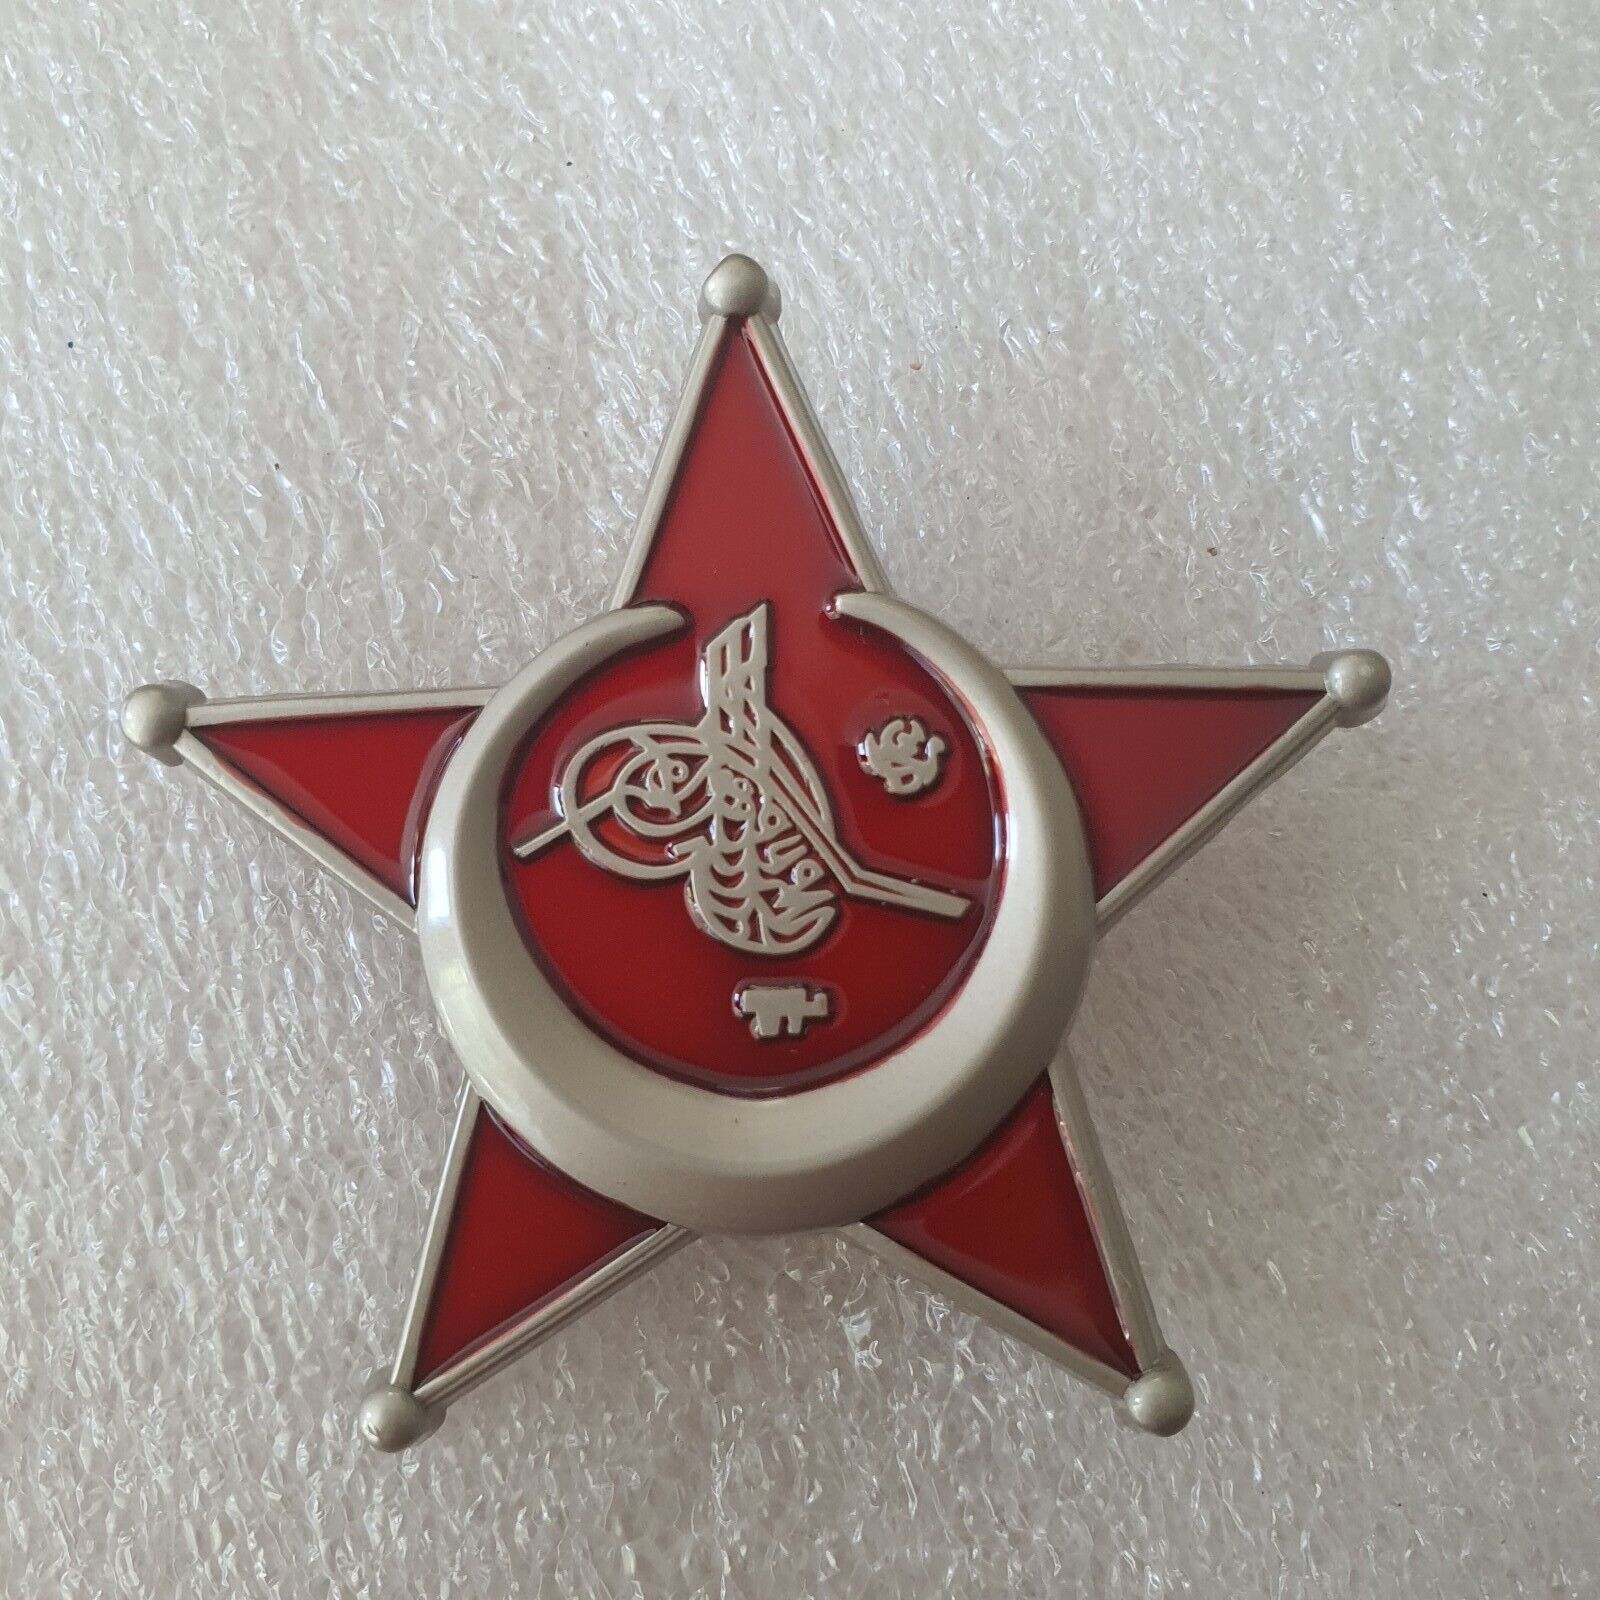 Ottoman War Medal/Gallipoli Star